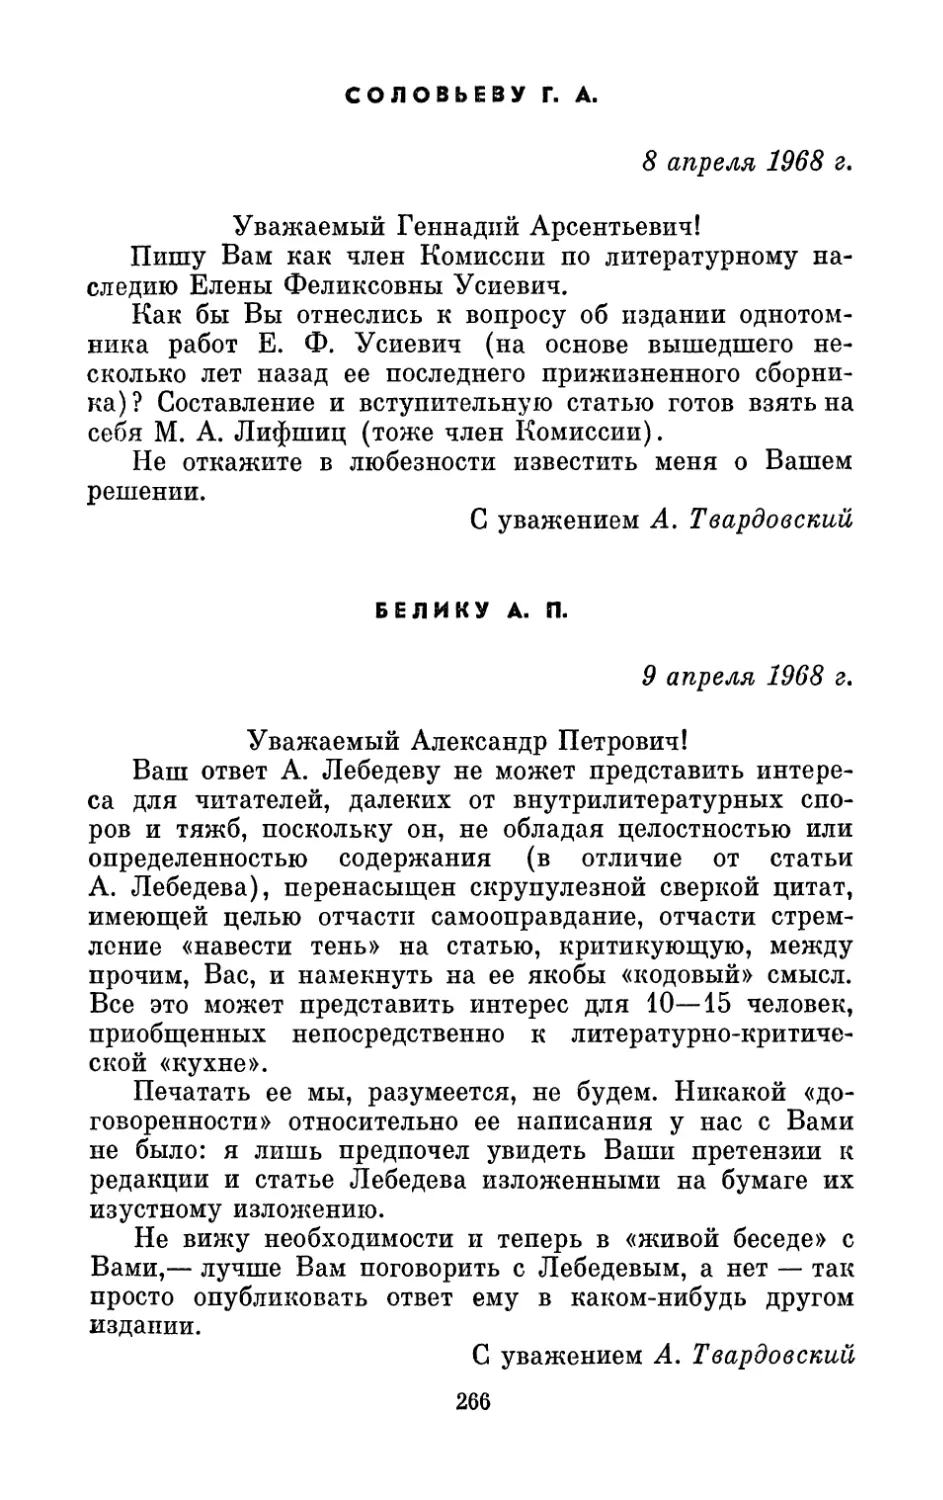 Соловьеву Г. А., 8 апреля 1968 г.
Белику А. П., 9 апреля 1968 г.